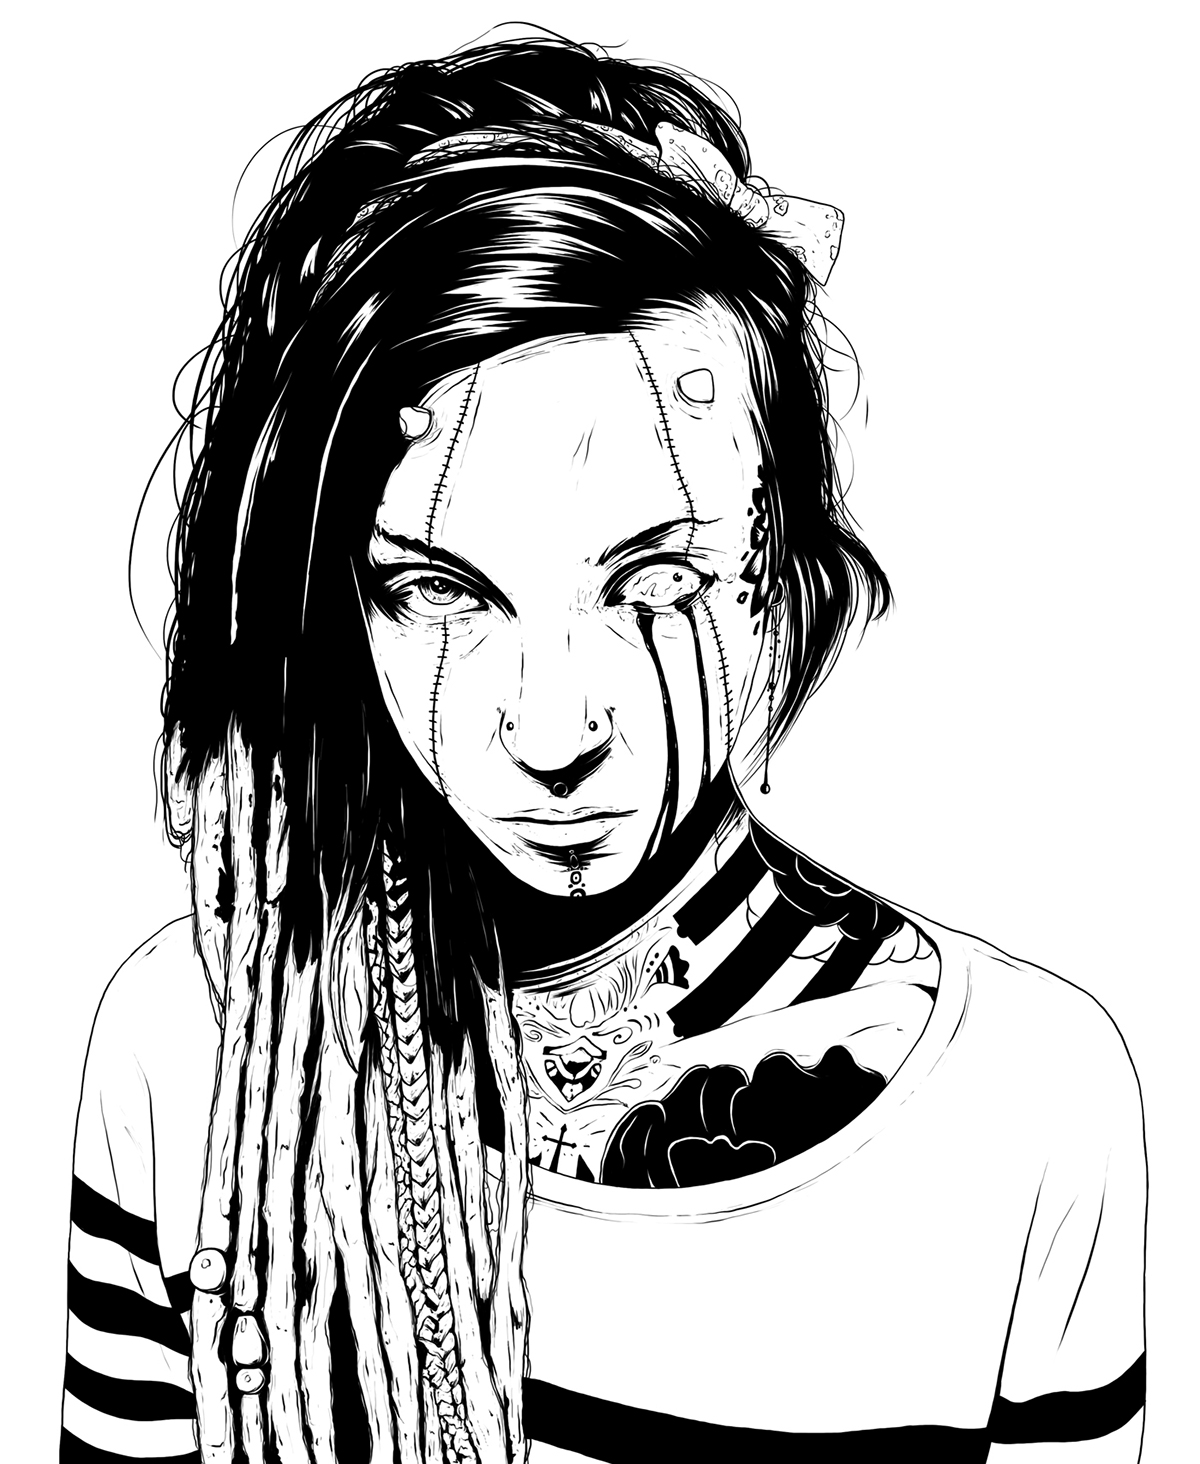 girl portrait conrado salinas  tribal eyes crazy evil psycho face ink yolandi visser tattoos piercings cool hair